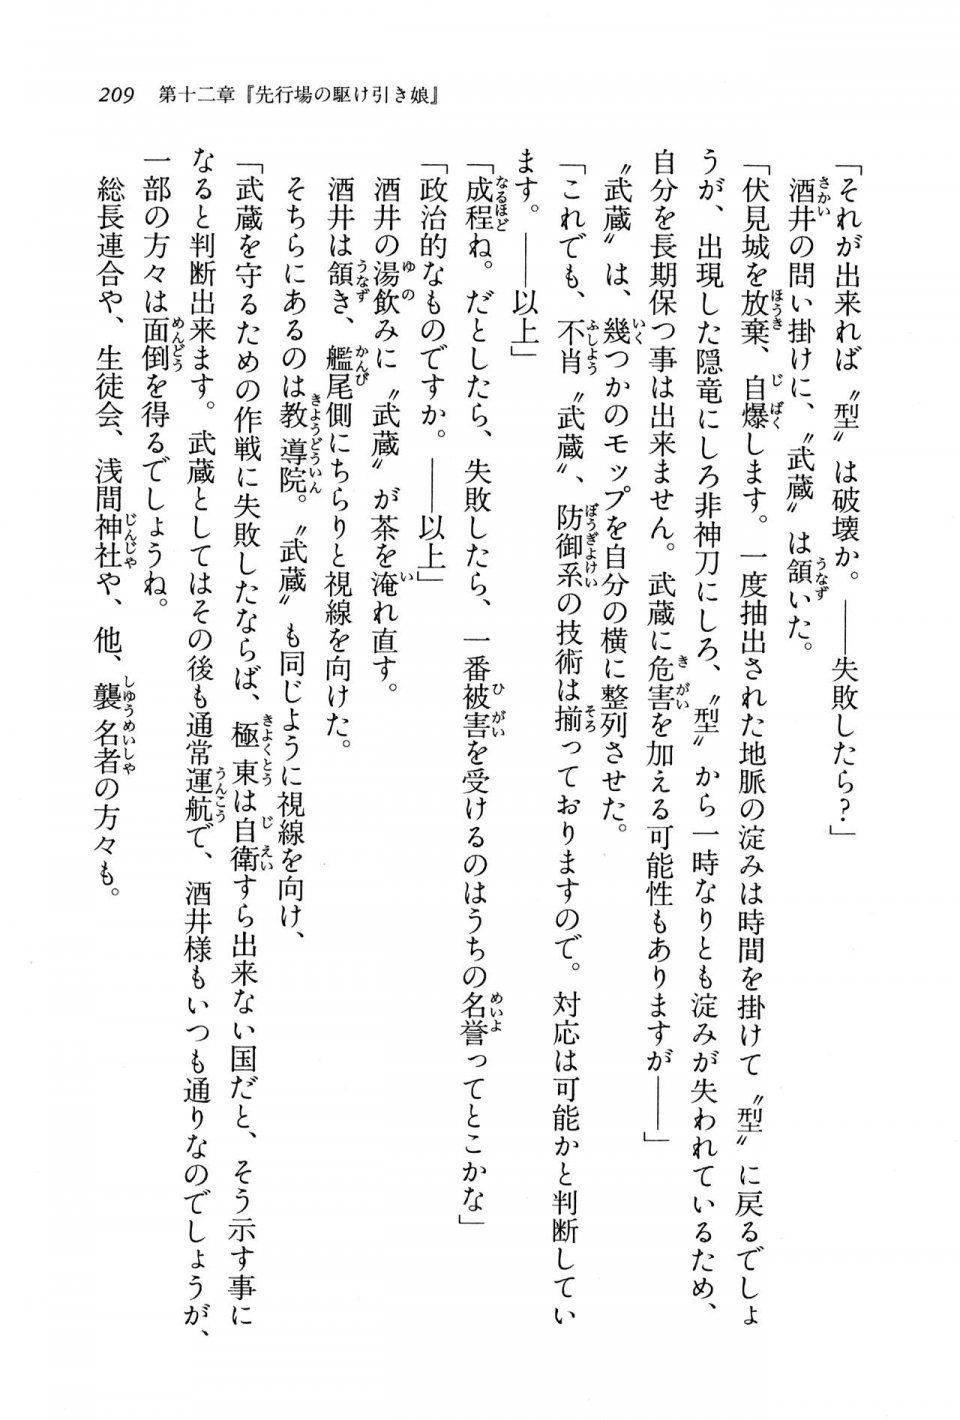 Kyoukai Senjou no Horizon BD Special Mininovel Vol 8(4B) - Photo #213